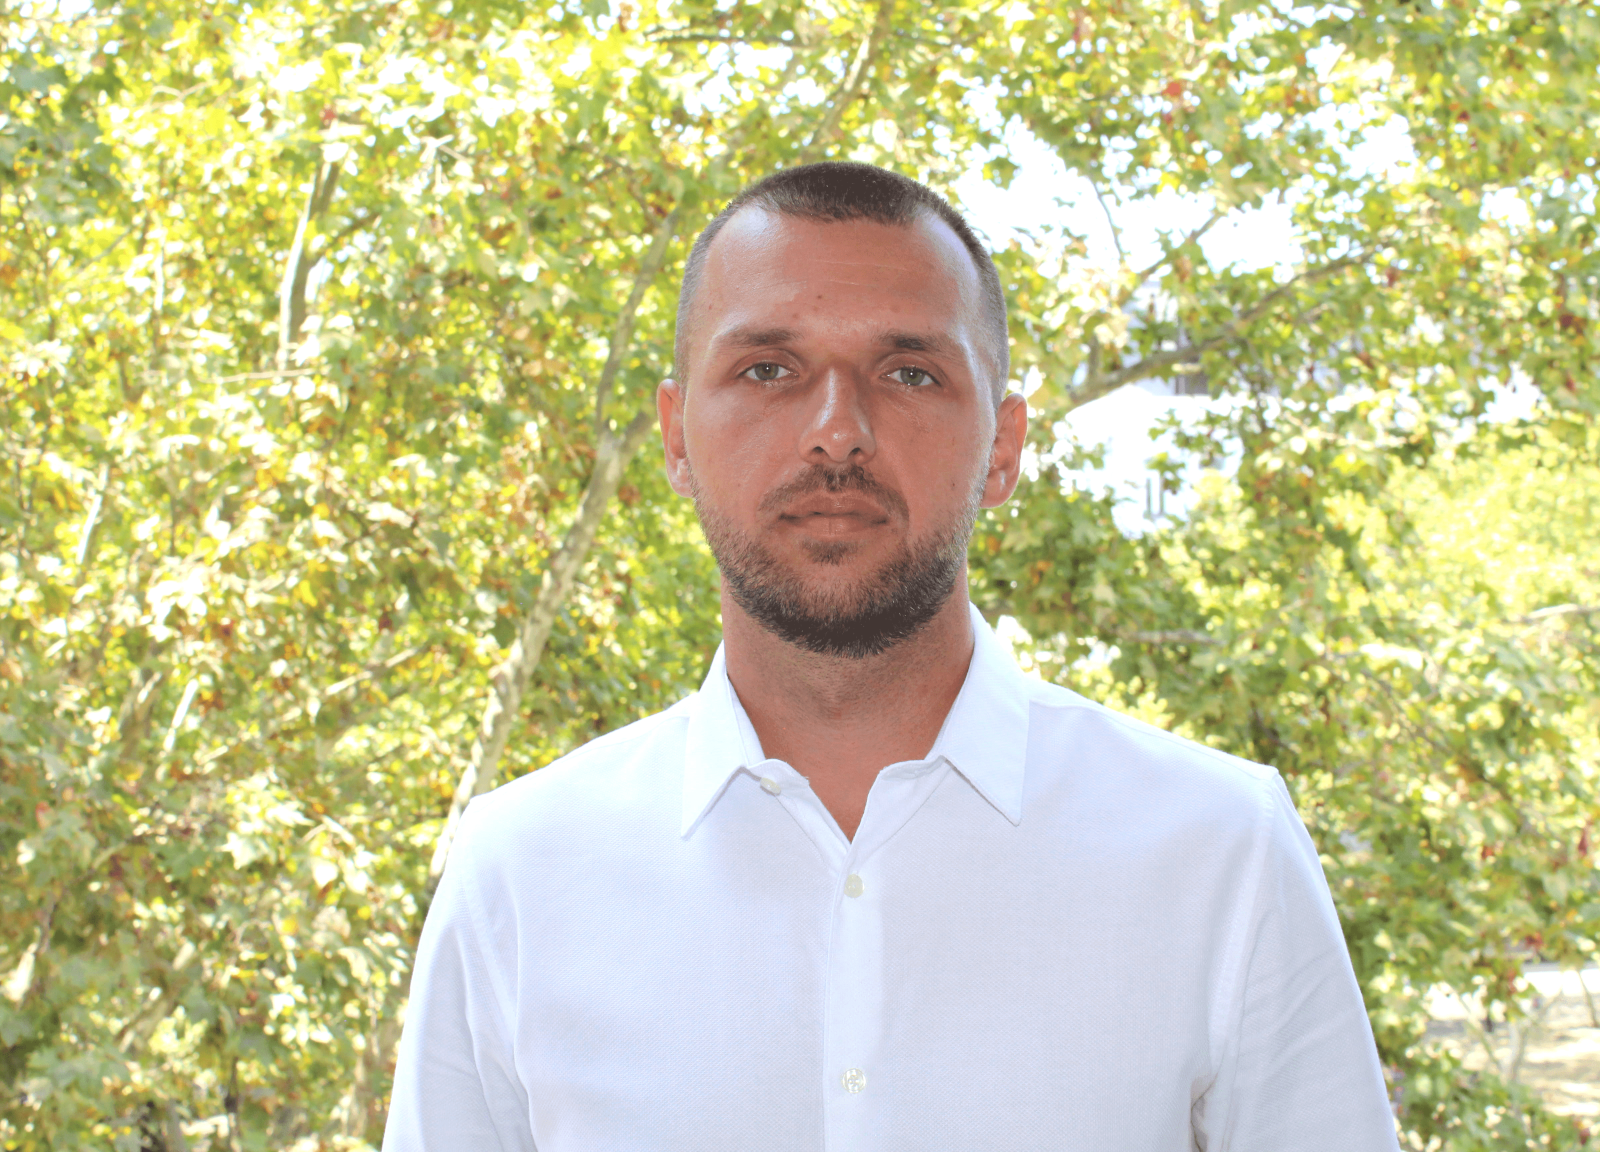 Filip Bejnar, SEO Manager at Portugal Homes.